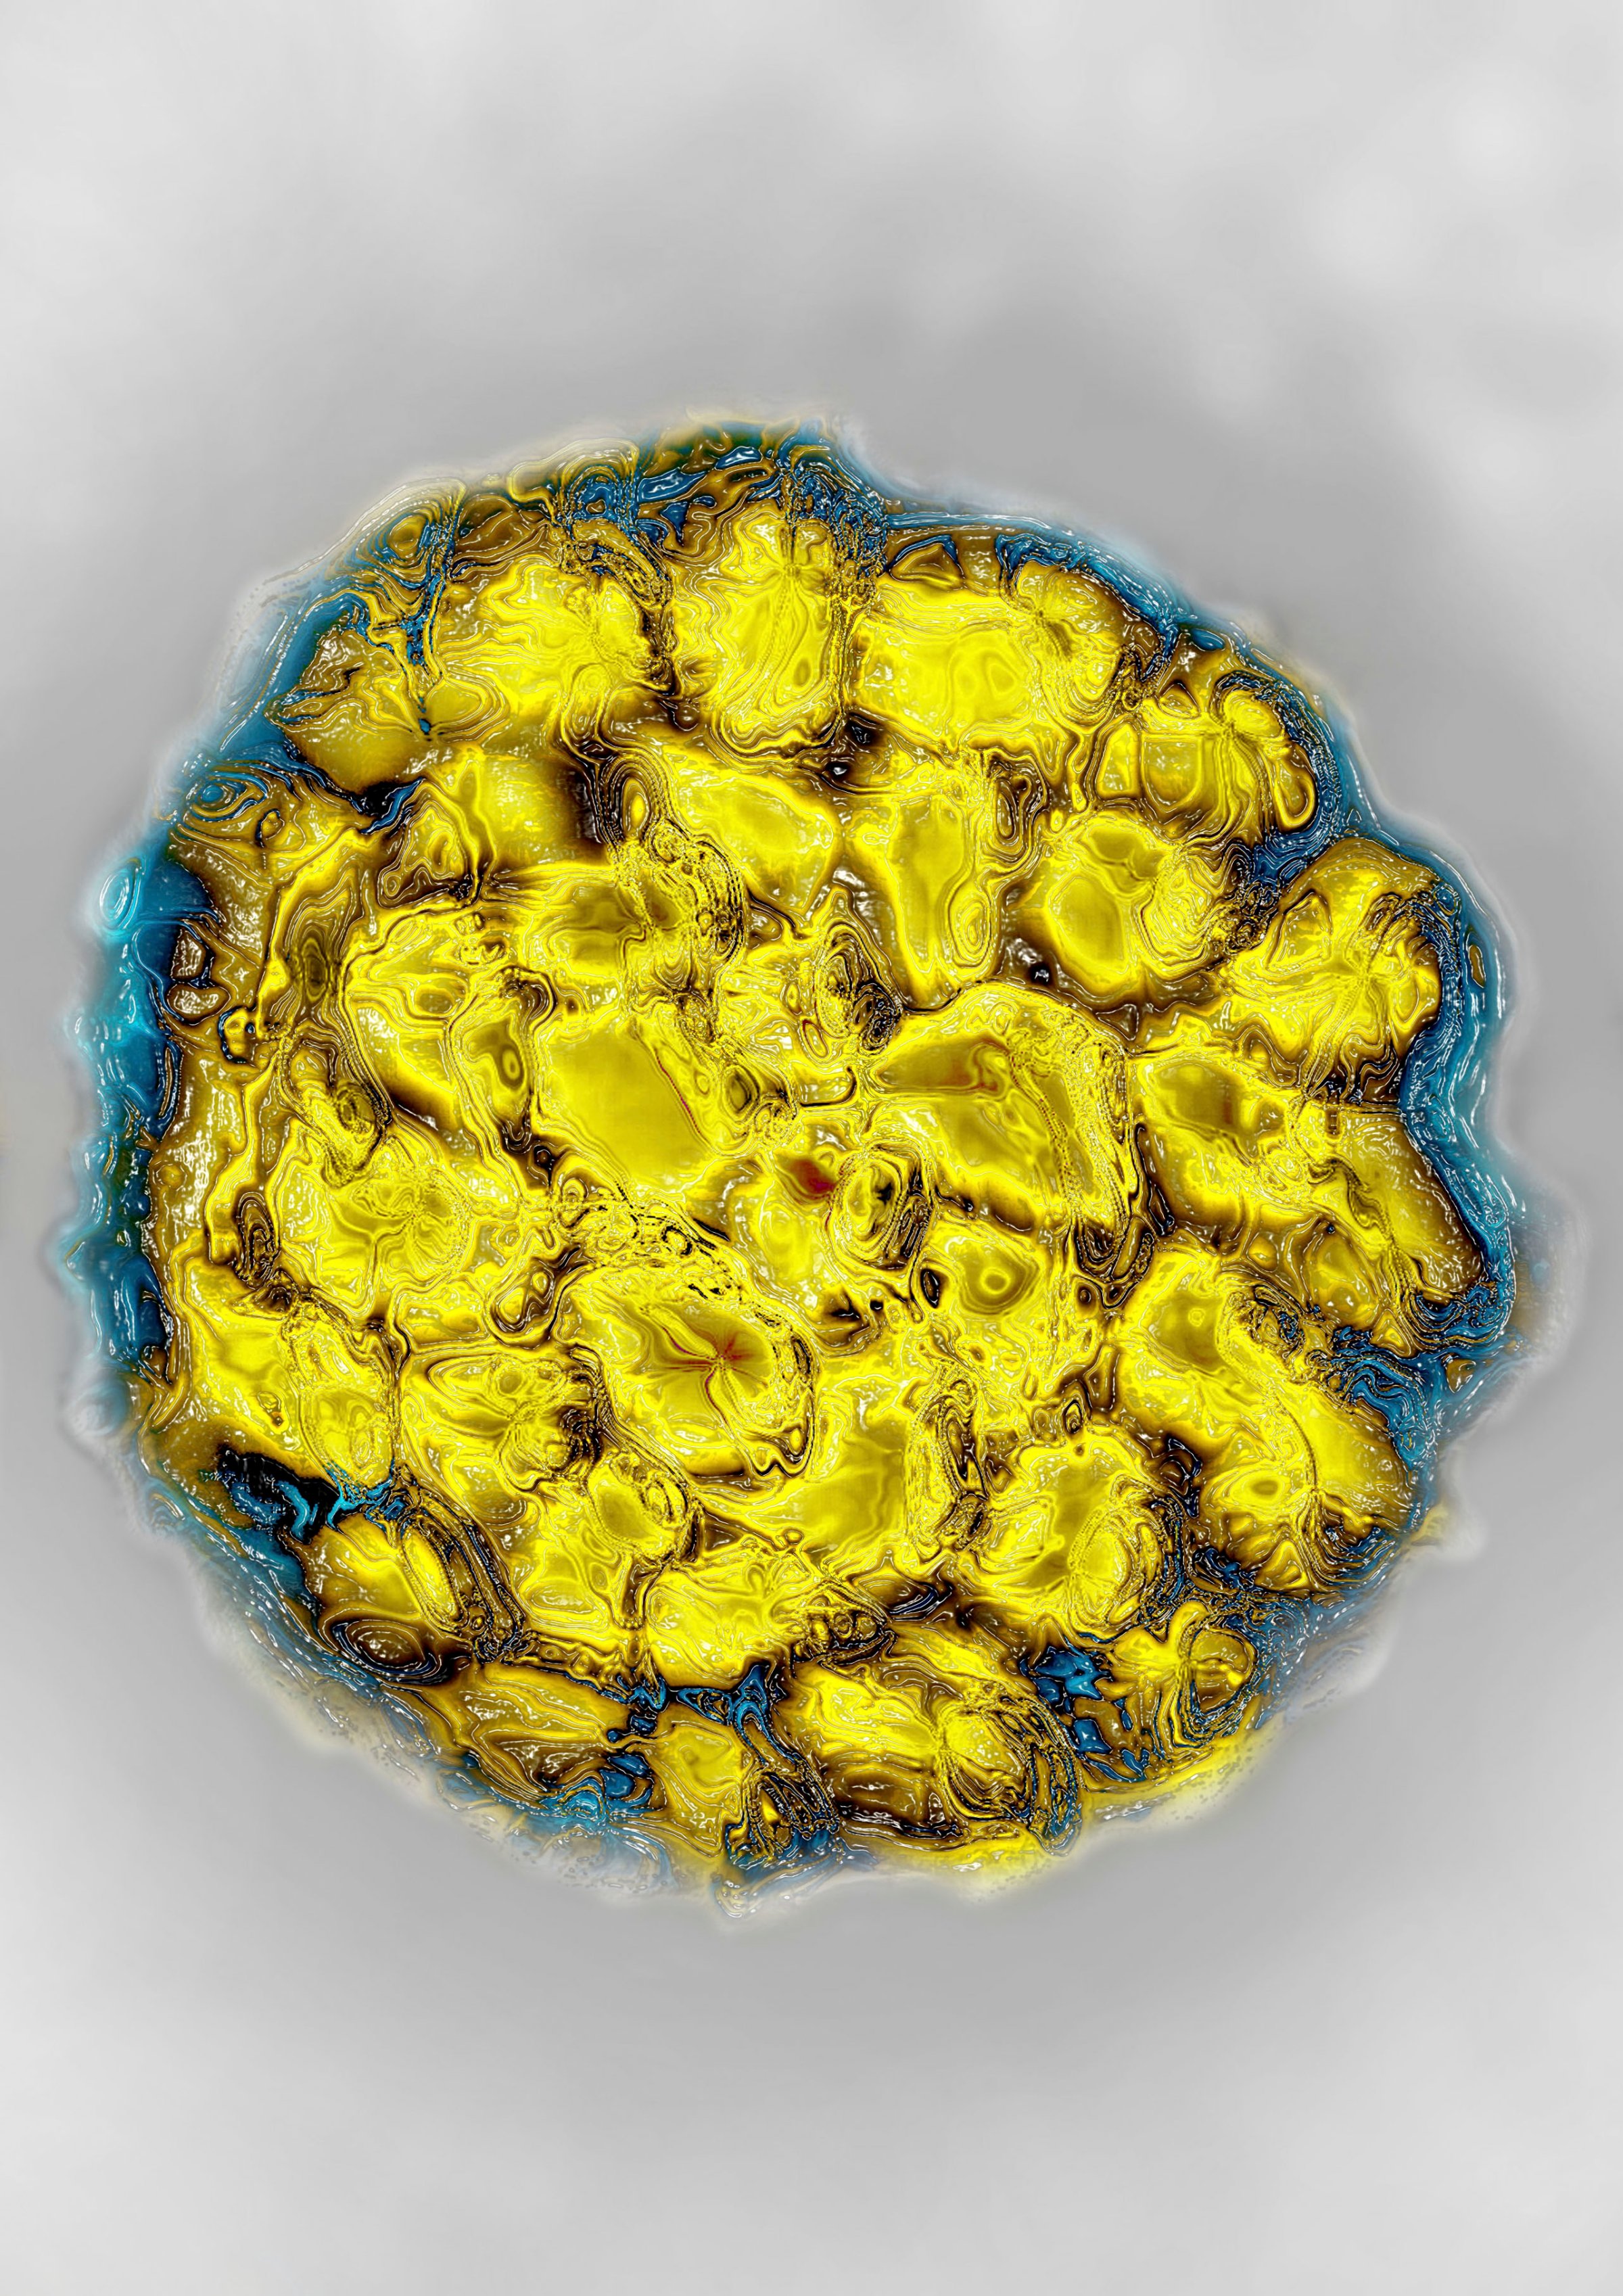 Papillomavirus Dna Virus. Hdri Image Made According To A View Under Transmission Electron Microscope, Viral Diameter 45 To 55 Nm.